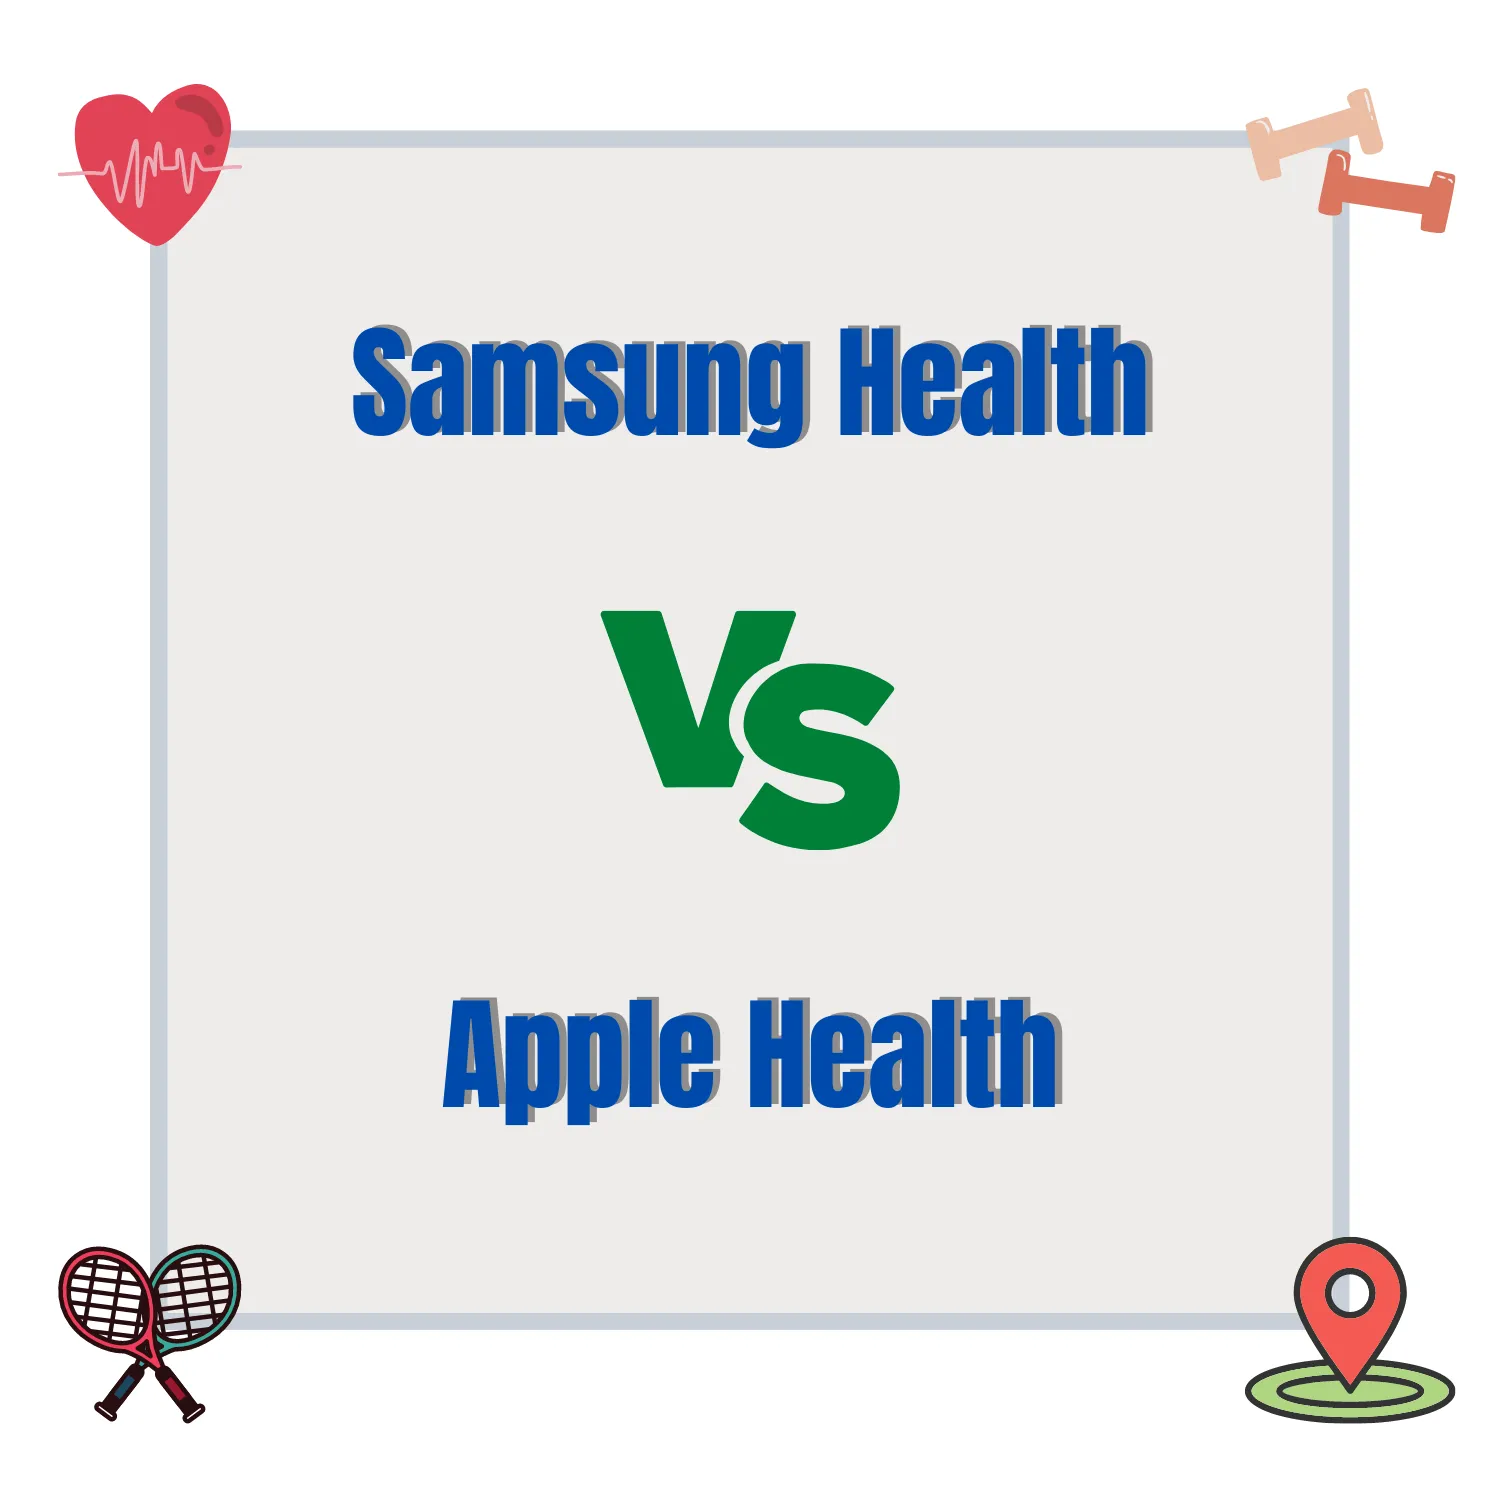 Samsung Health vs Apple Health